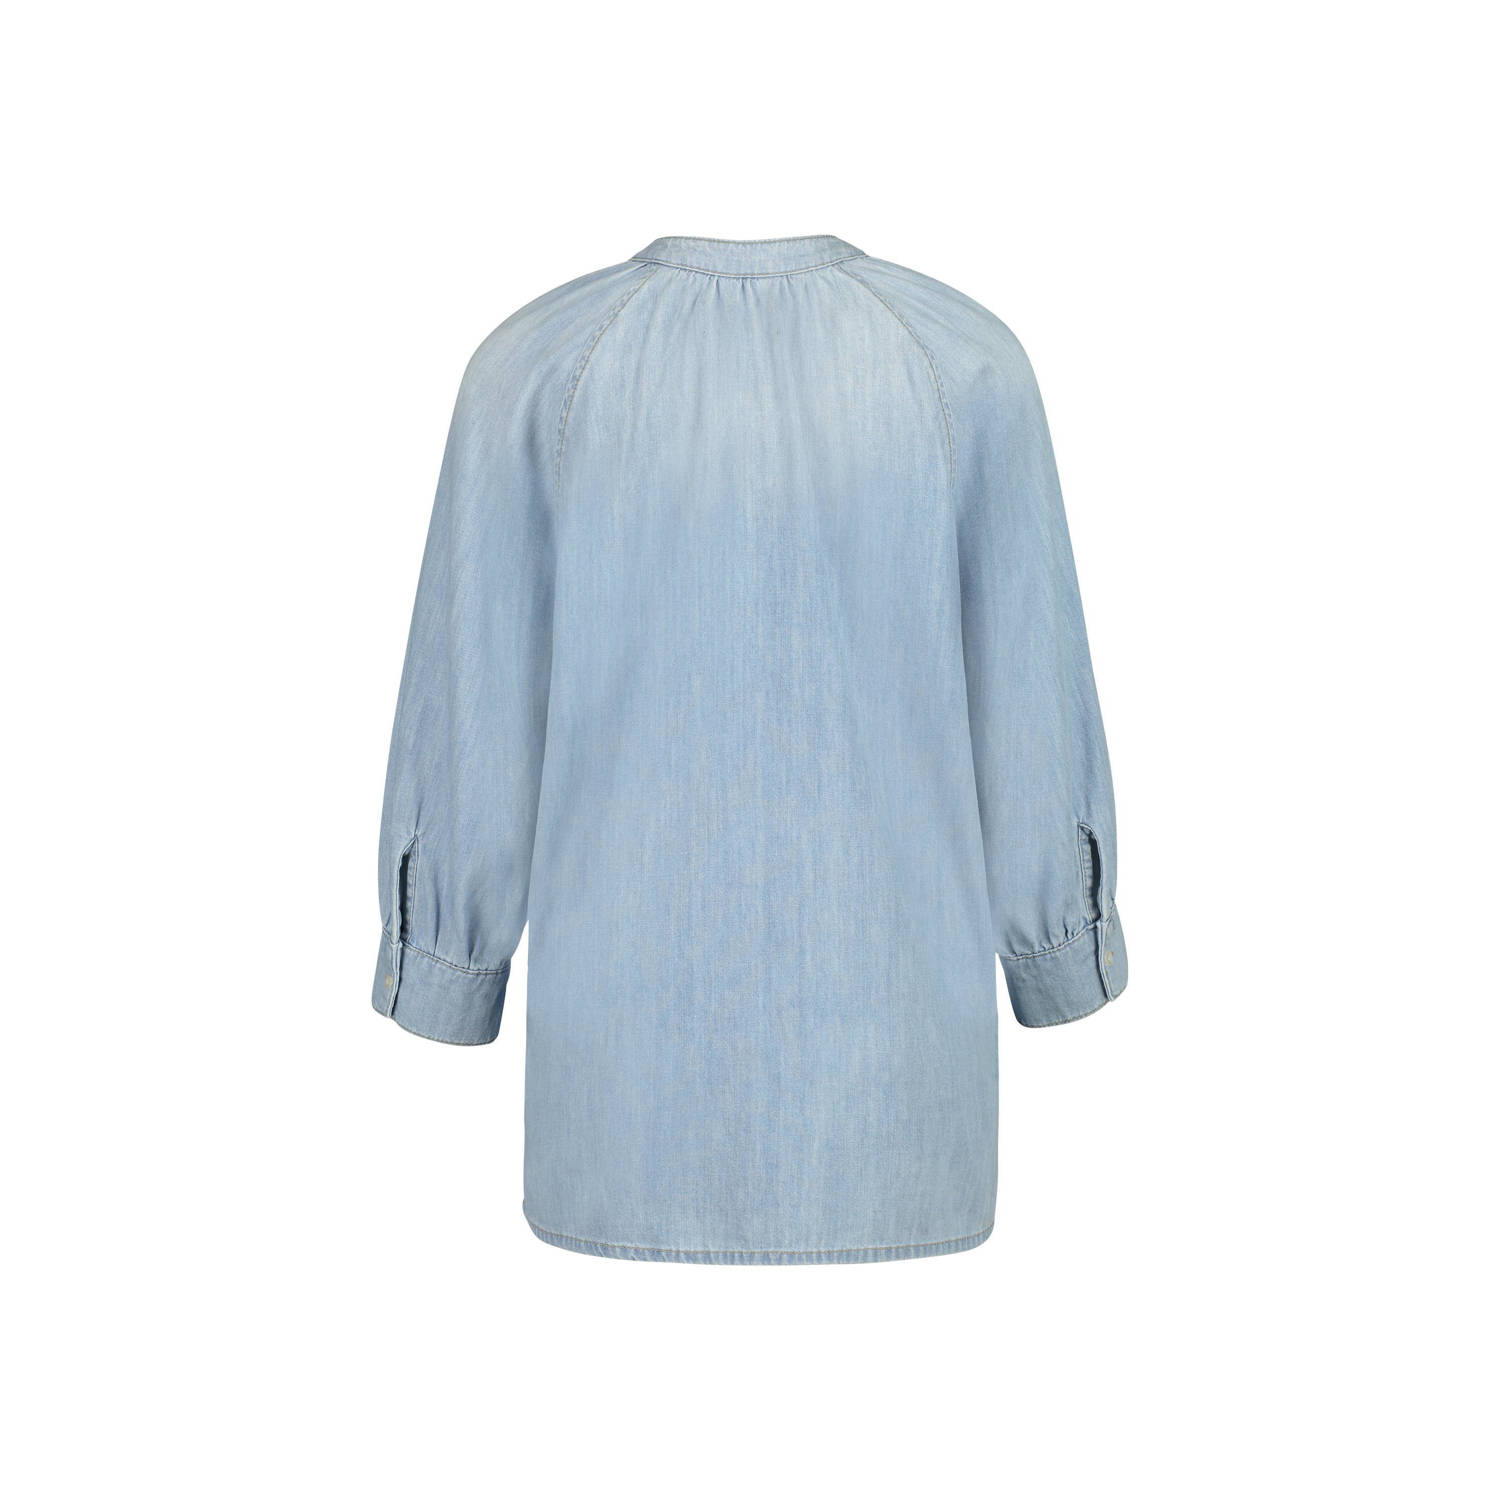 Expresso blouse light blue denim